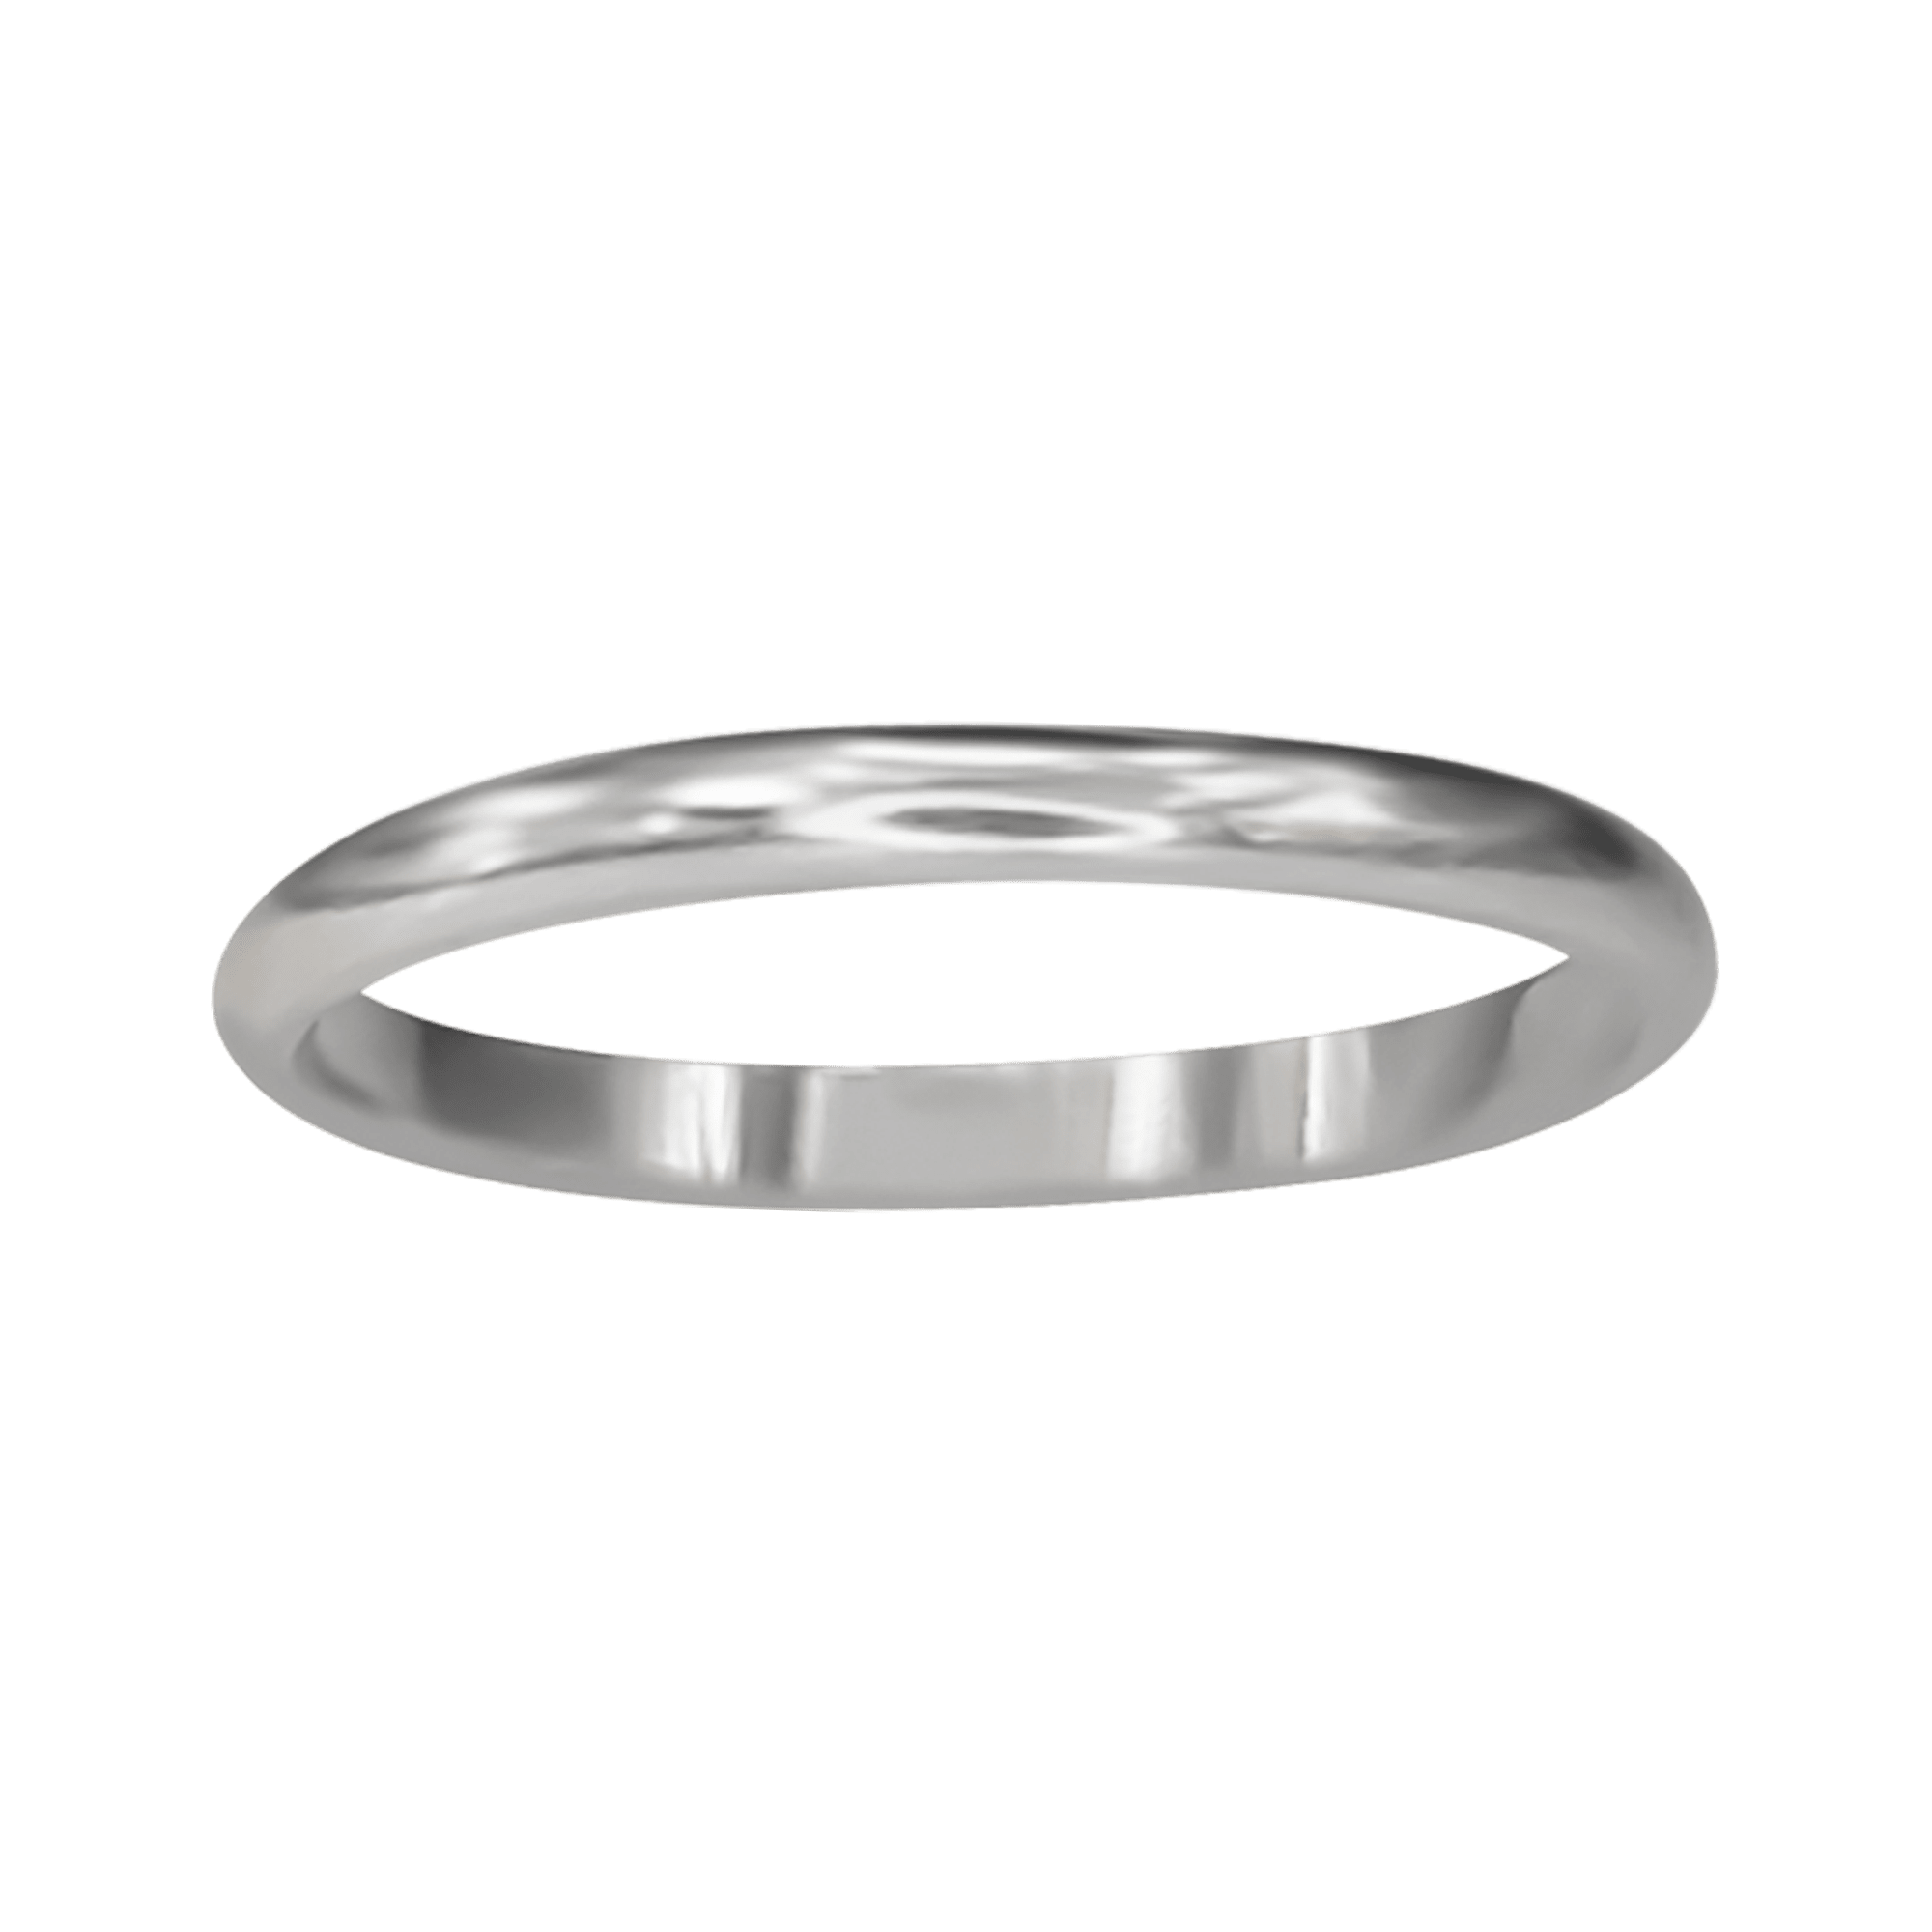 handmade symbolic spiritual jewellery sustainable fashion band ring